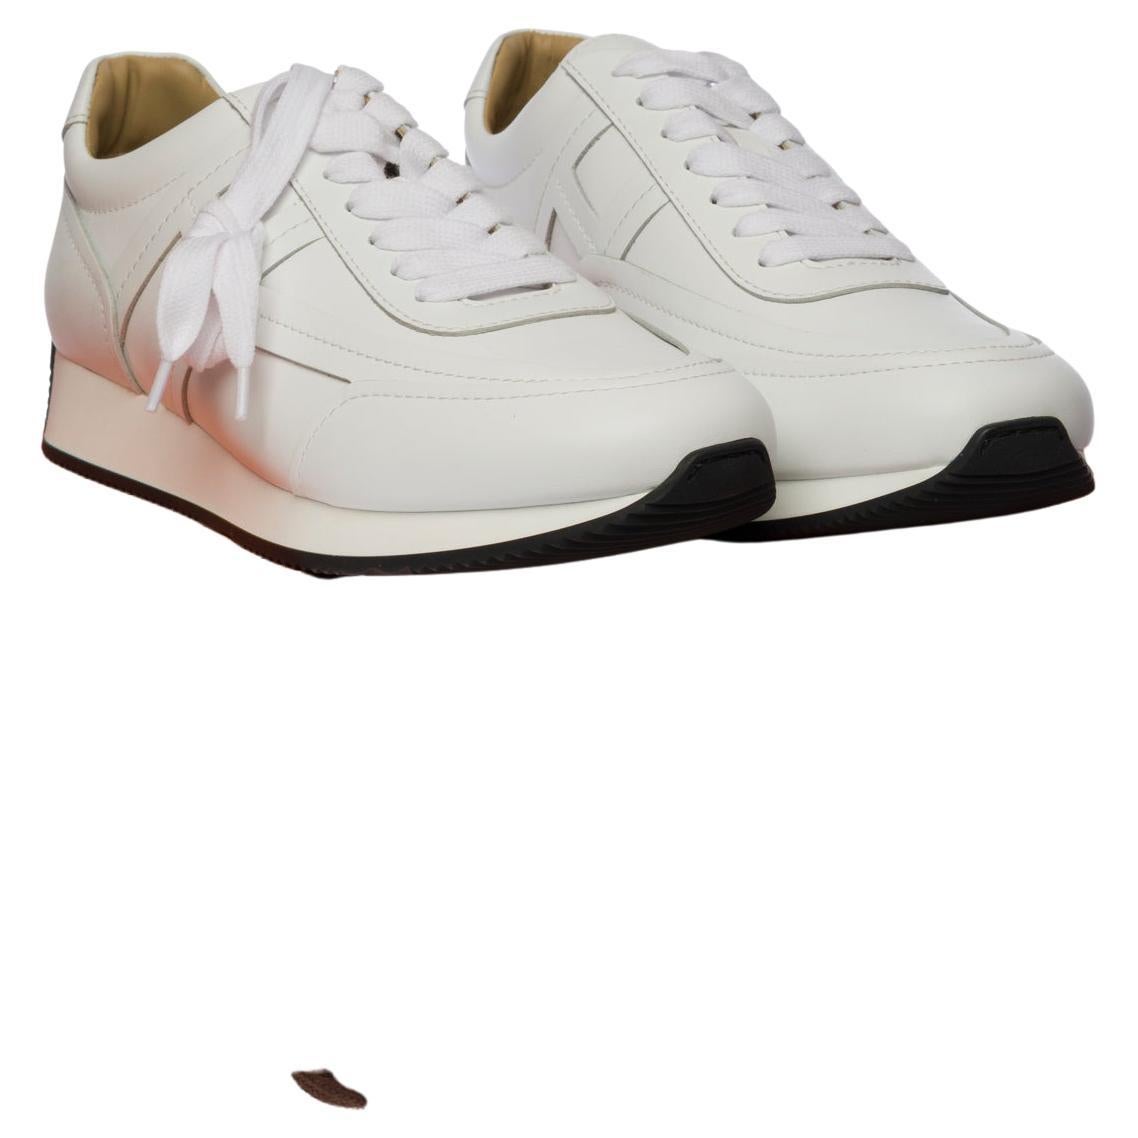 New - Hermès Chris Men's Sneakers in white calf - Size 43.5